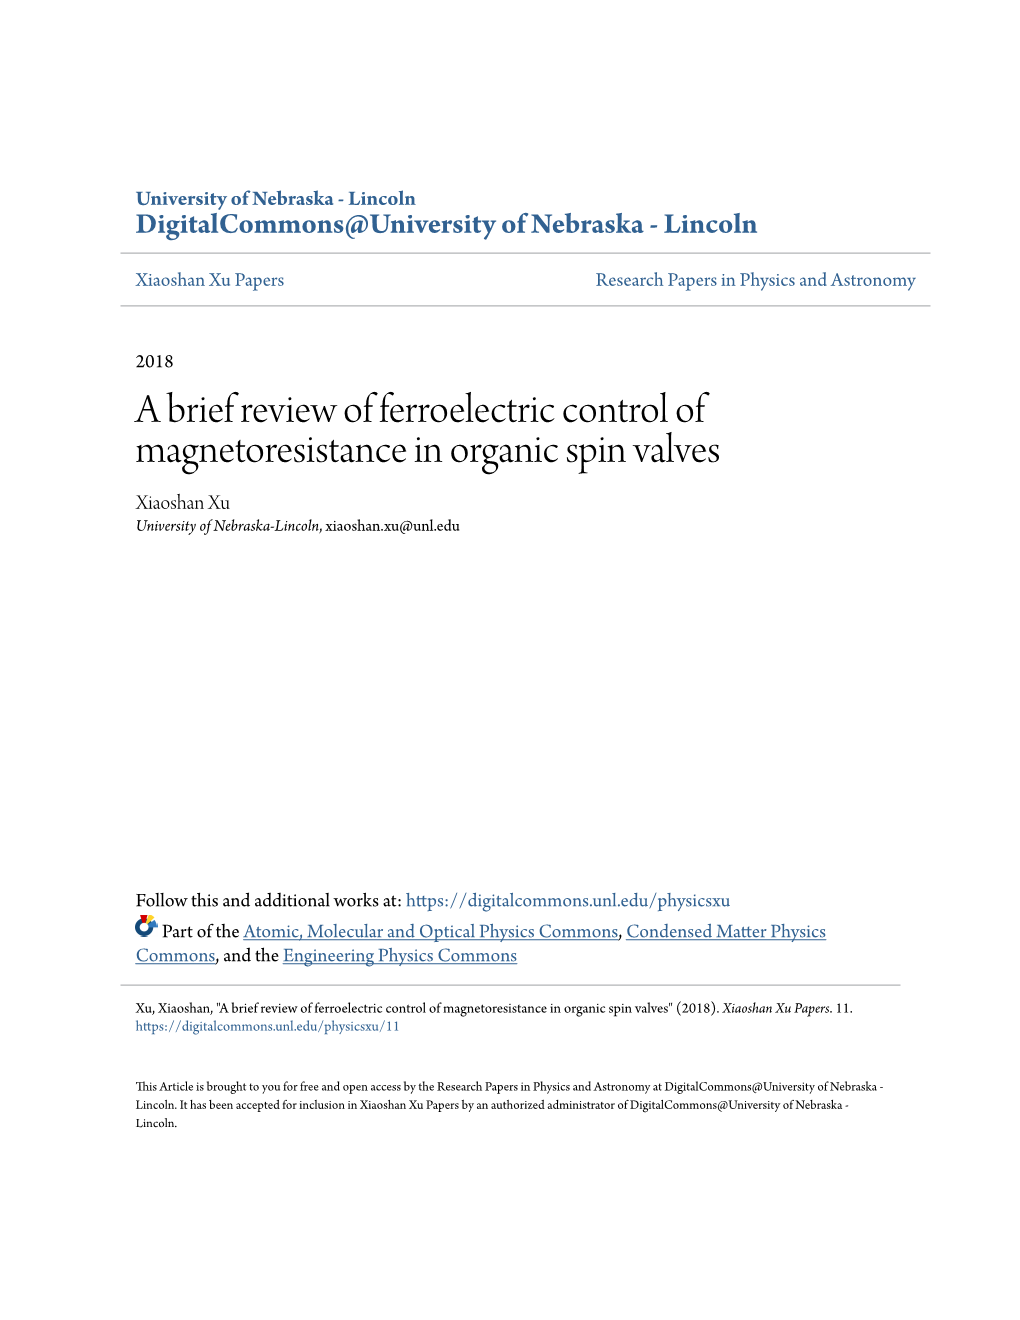 A Brief Review of Ferroelectric Control of Magnetoresistance in Organic Spin Valves Xiaoshan Xu University of Nebraska-Lincoln, Xiaoshan.Xu@Unl.Edu